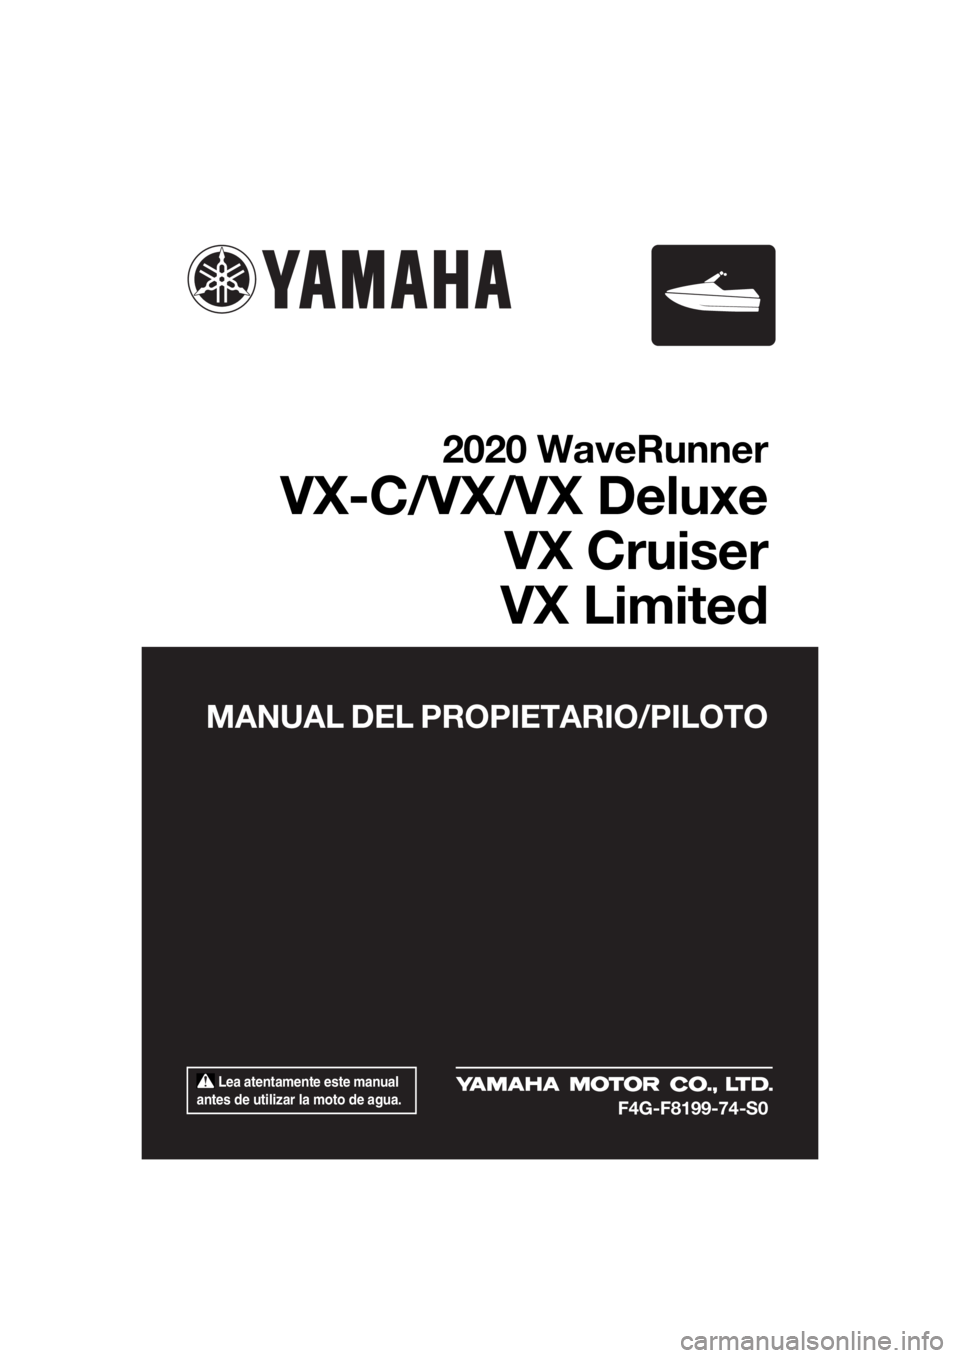 YAMAHA VX CRUISER 2020  Manuale de Empleo (in Spanish)  Lea atentamente este manual 
antes de utilizar la moto de agua.
MANUAL DEL PROPIETARIO/PILOTO
2020 WaveRunner
VX-C/VX/VX Deluxe
VX Cruiser
VX Limited
F4G-F8199-74-S0
UF4G74S0.book  Page 1  Monday, Ju